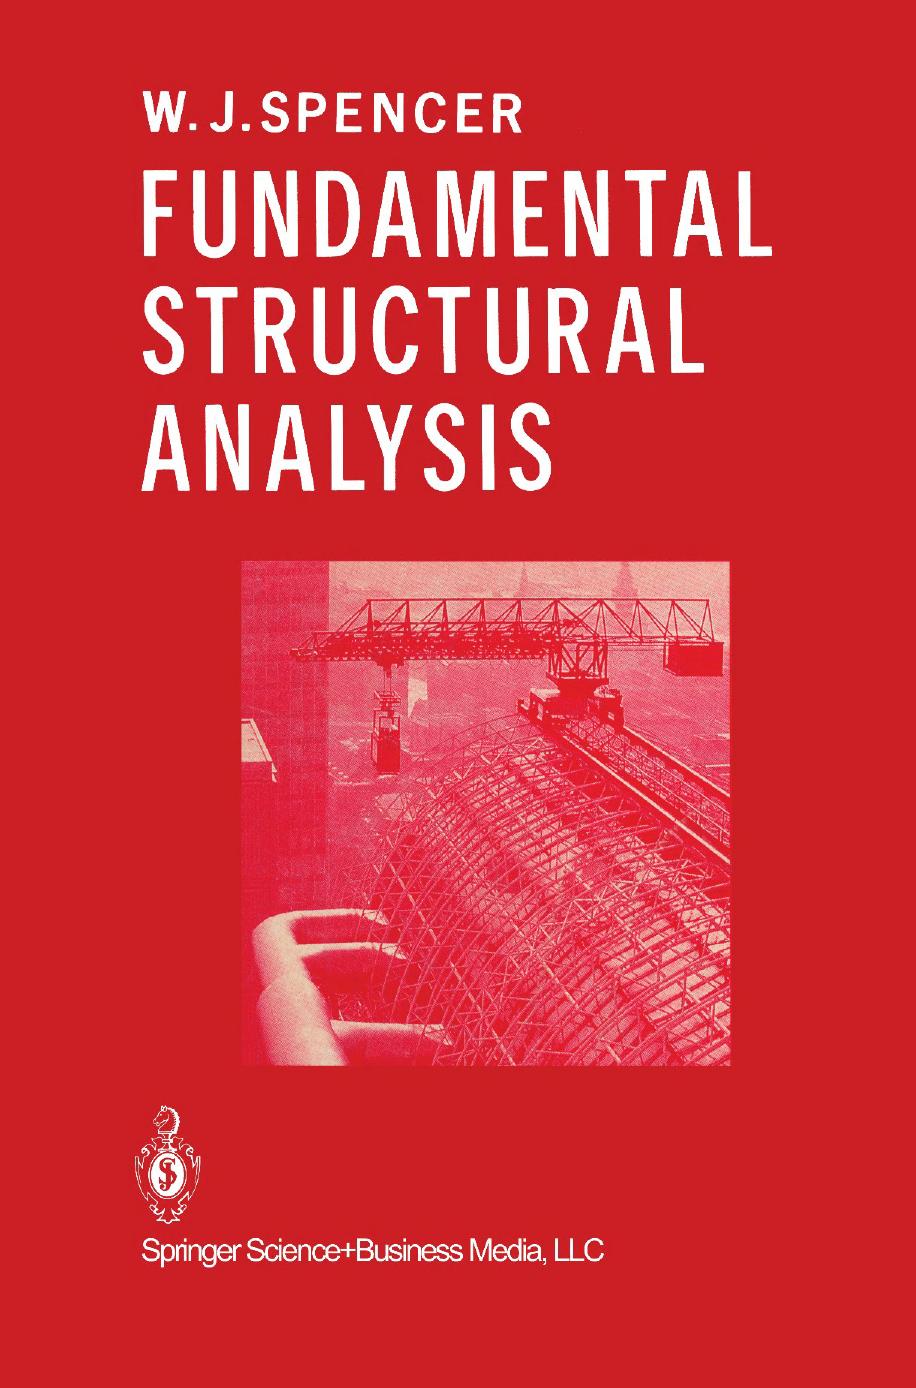 Fundamental structural analysis